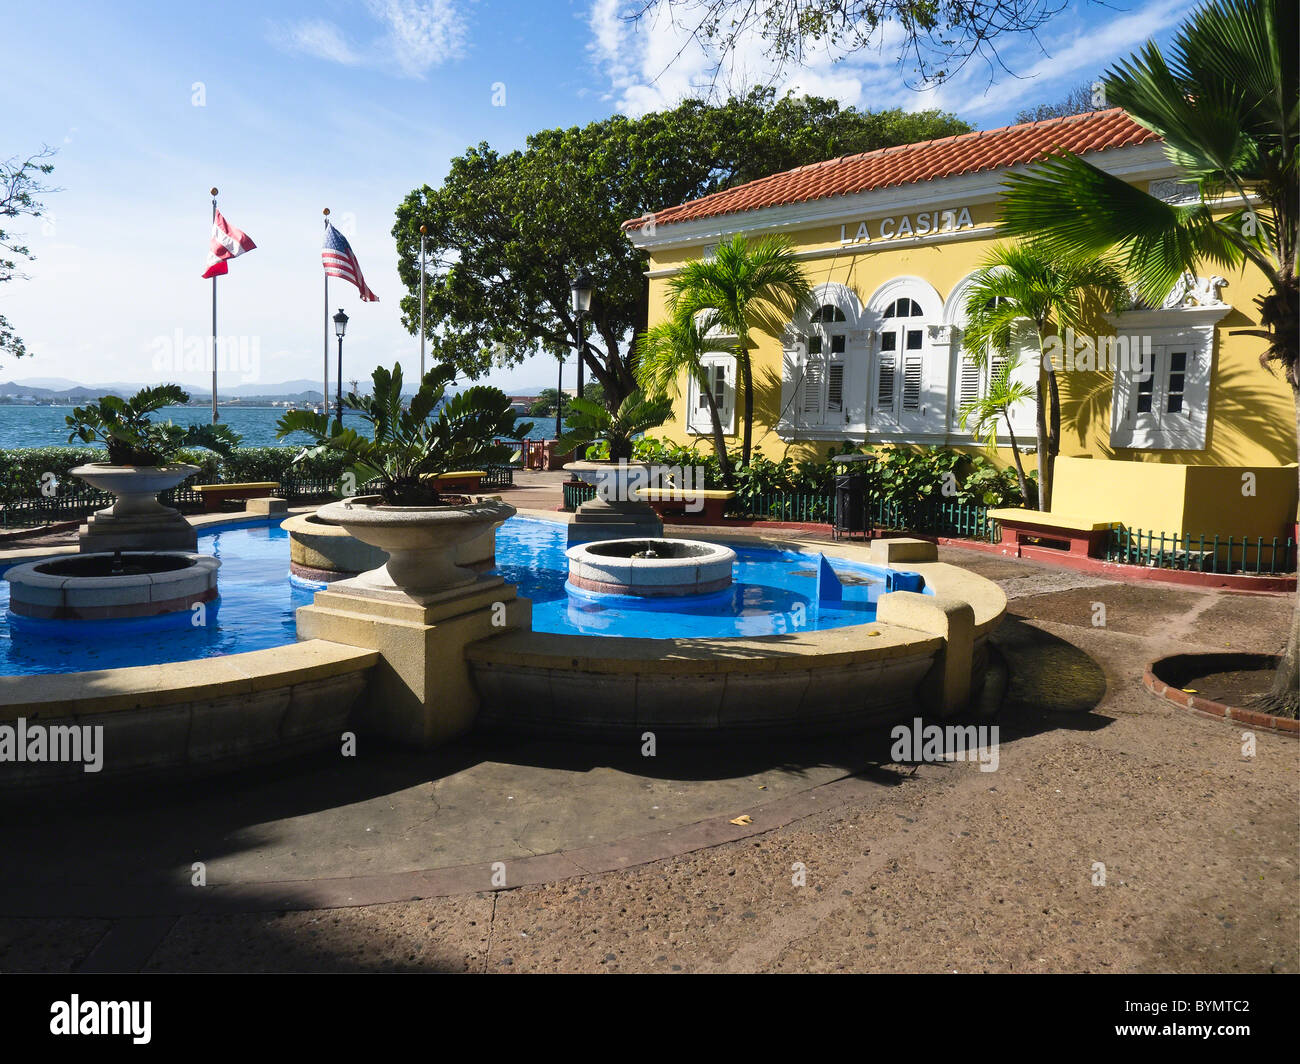 La Casita, Tourist Information Gebäude, Hafen von San Juan, Puerto Rico Stockfoto